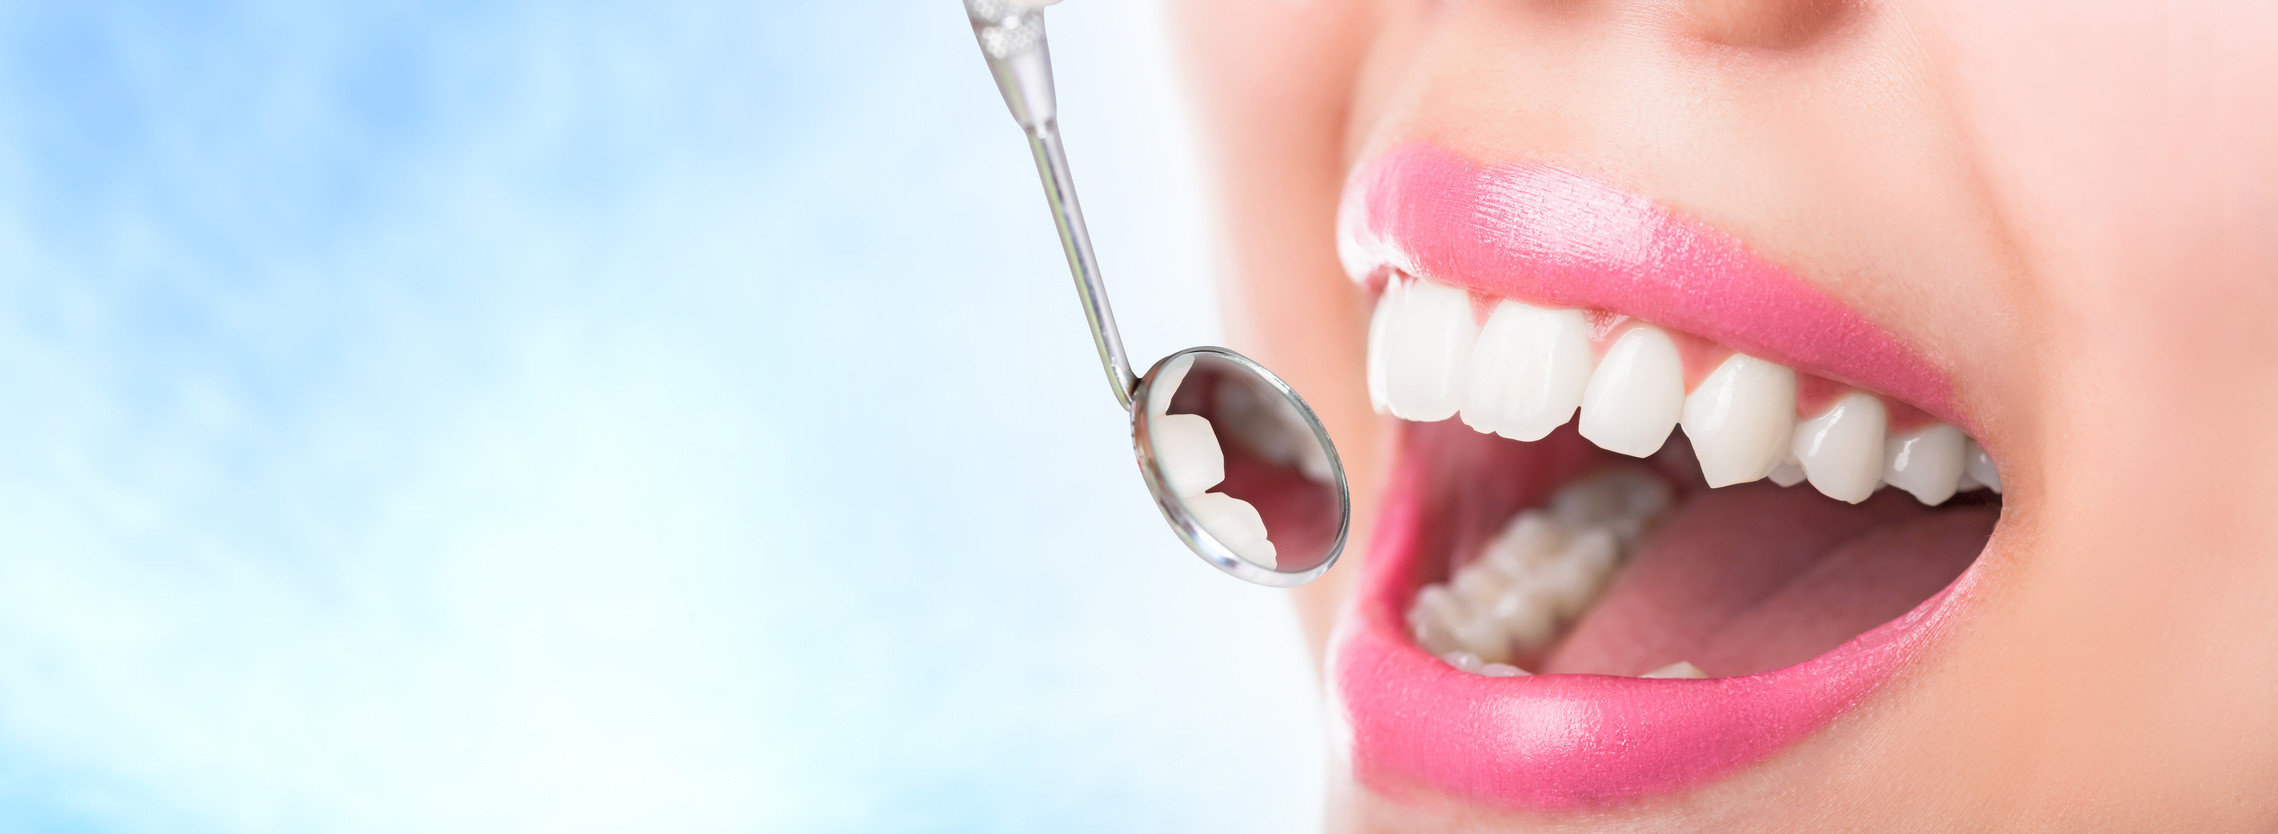 konsultacja-stomatologiczna-dentysta-uk-promocj